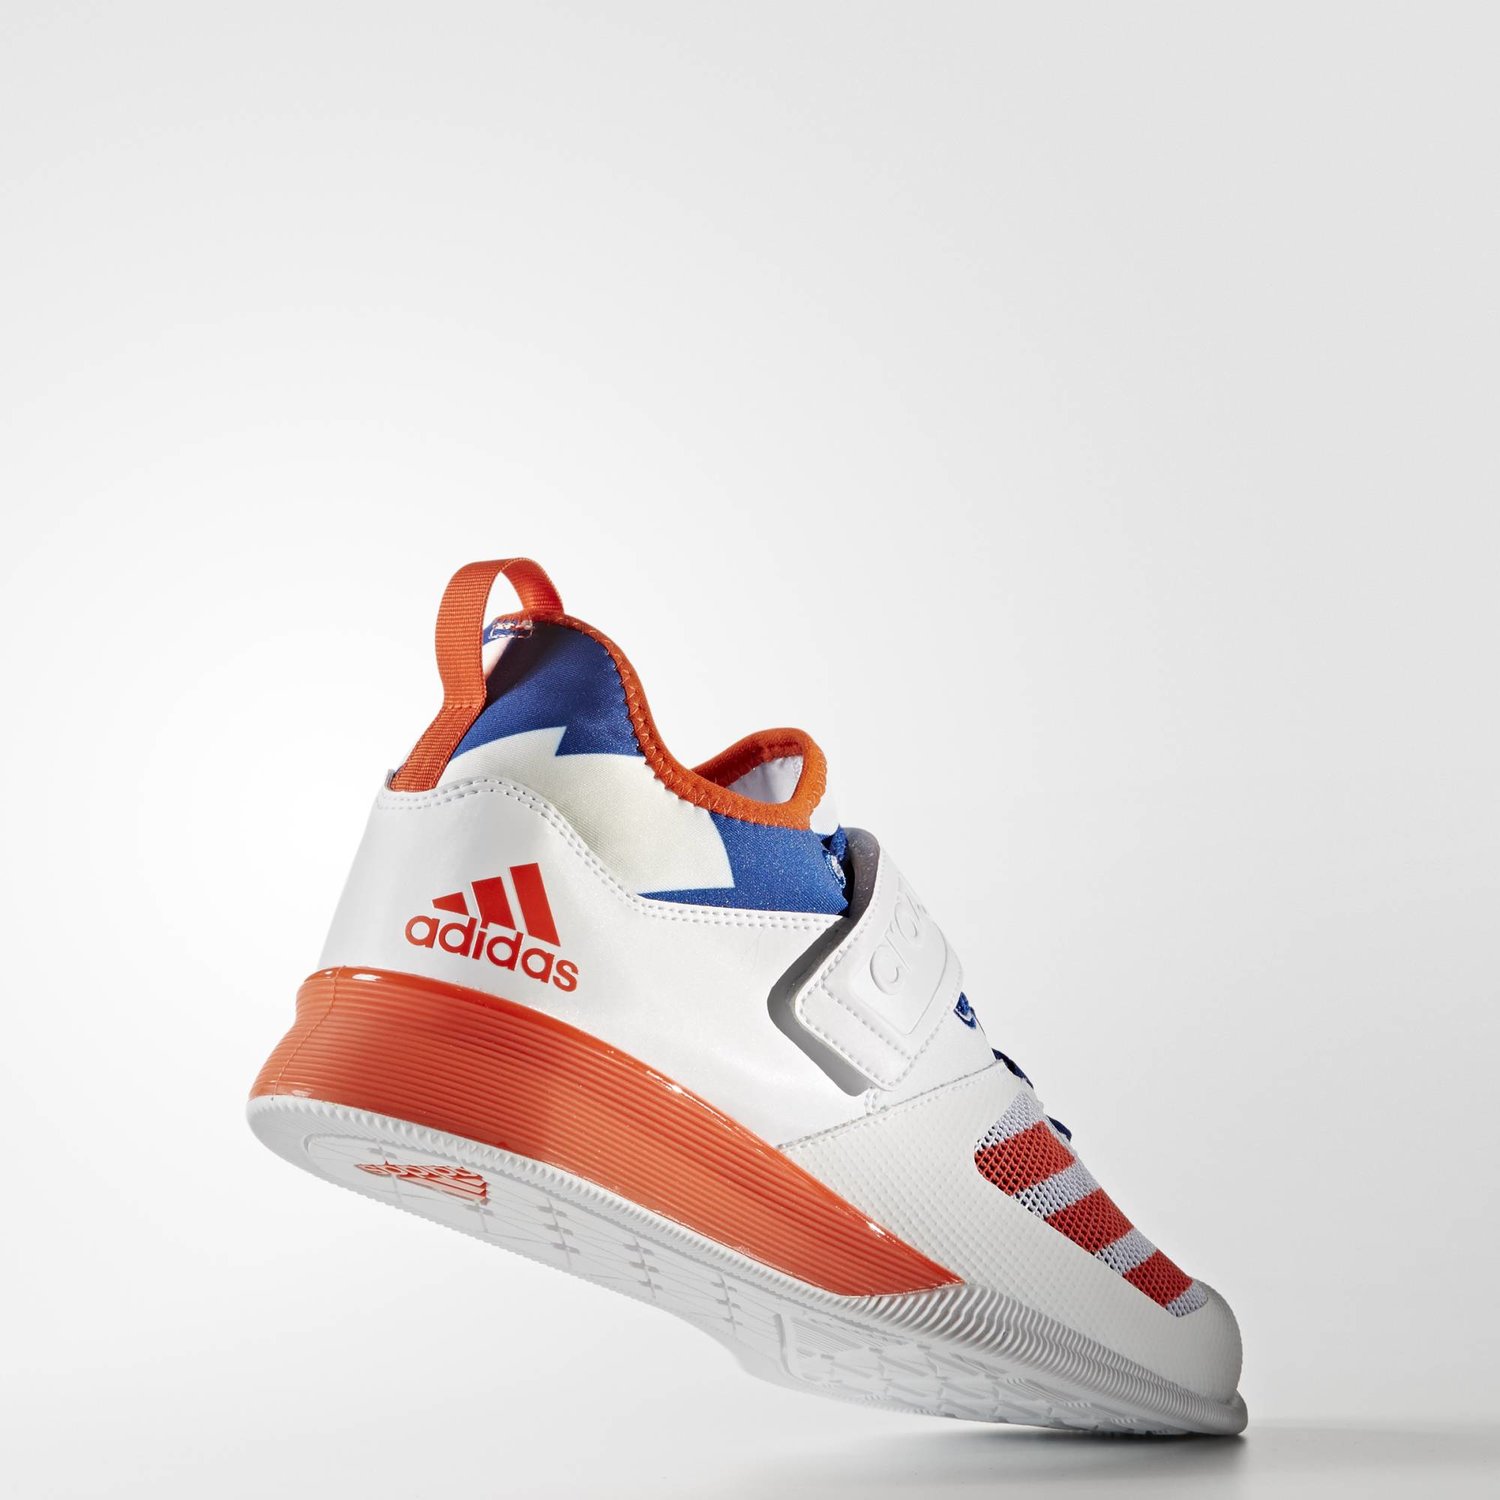 Adidas Crazy Power Crossfit Shoes (orange/white) — Cobra Weightlifting